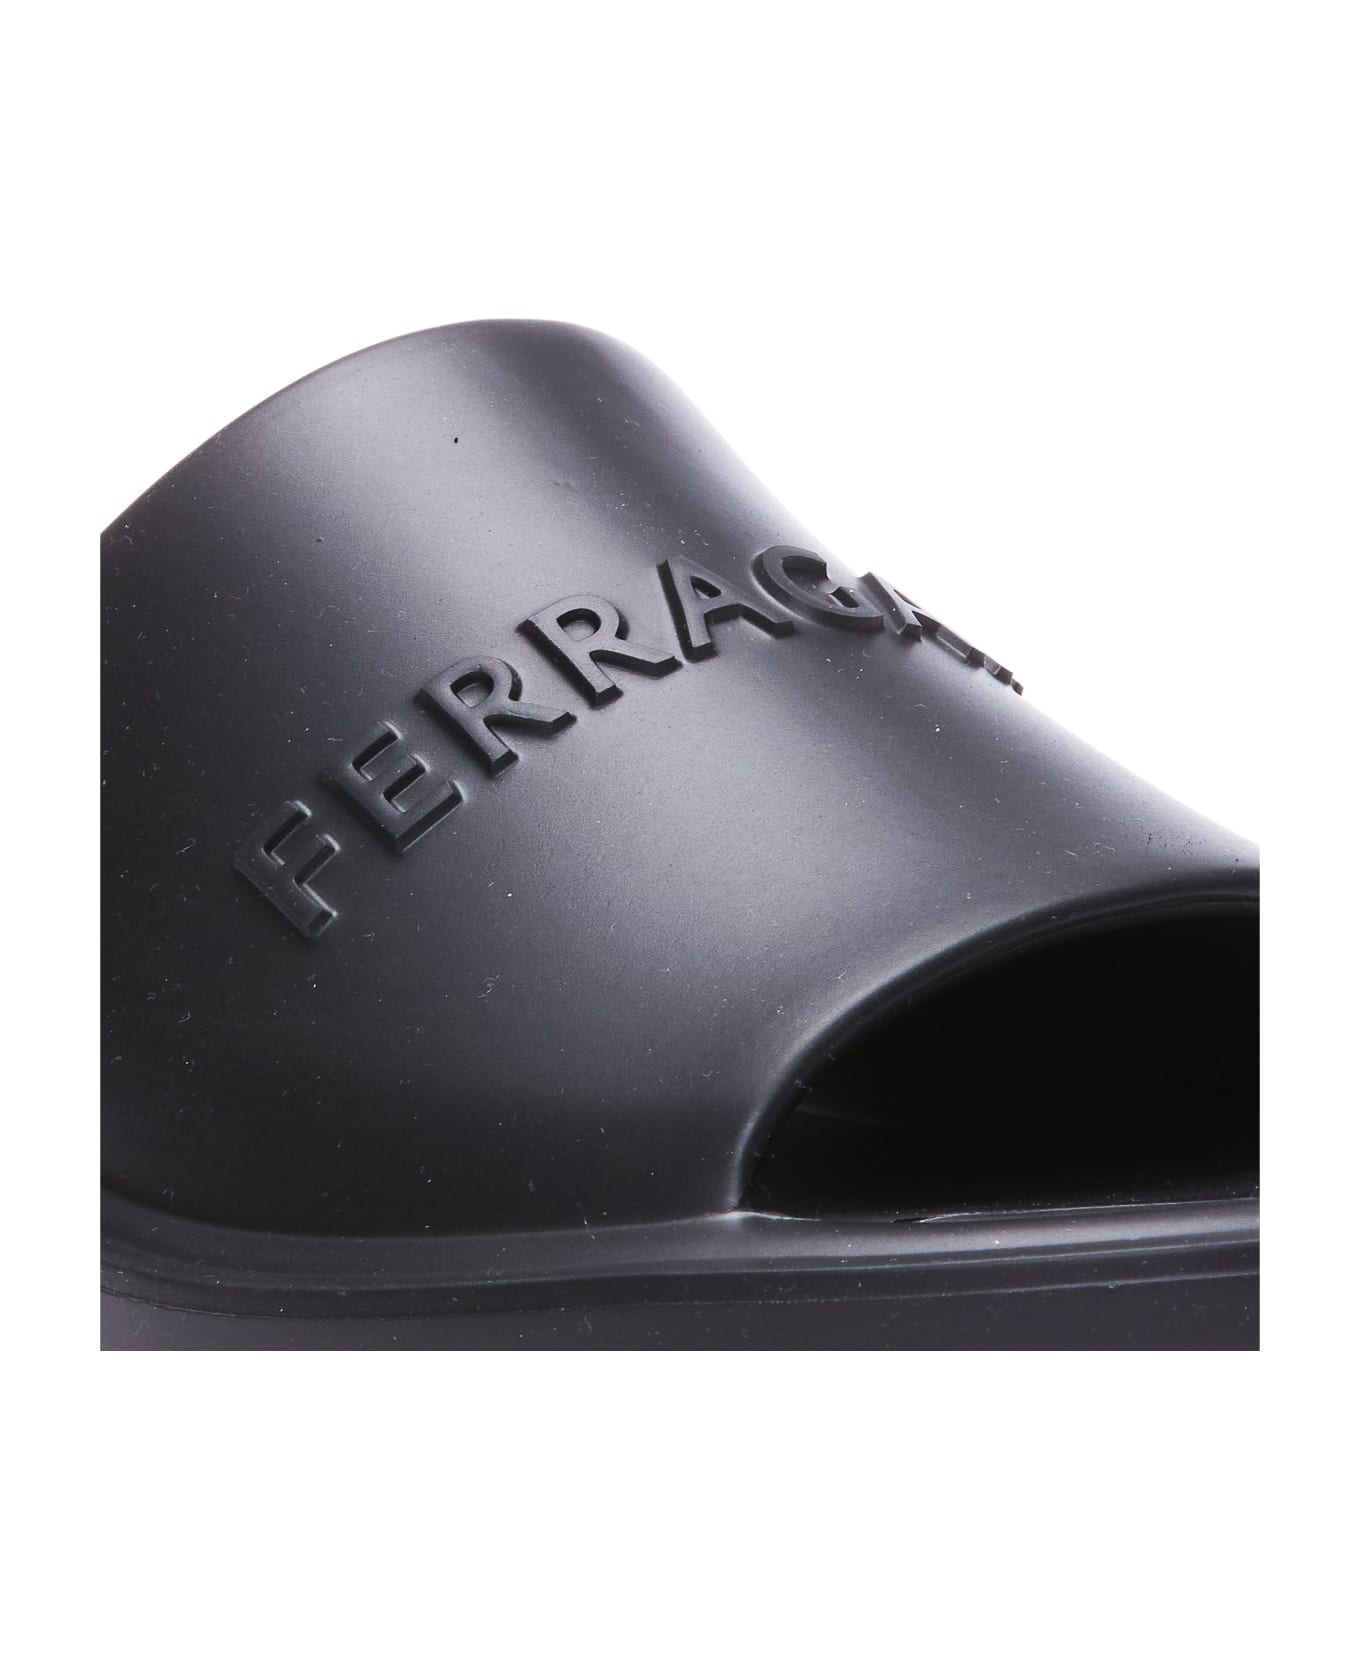 Ferragamo Logo Flat Sandals - Black サンダル